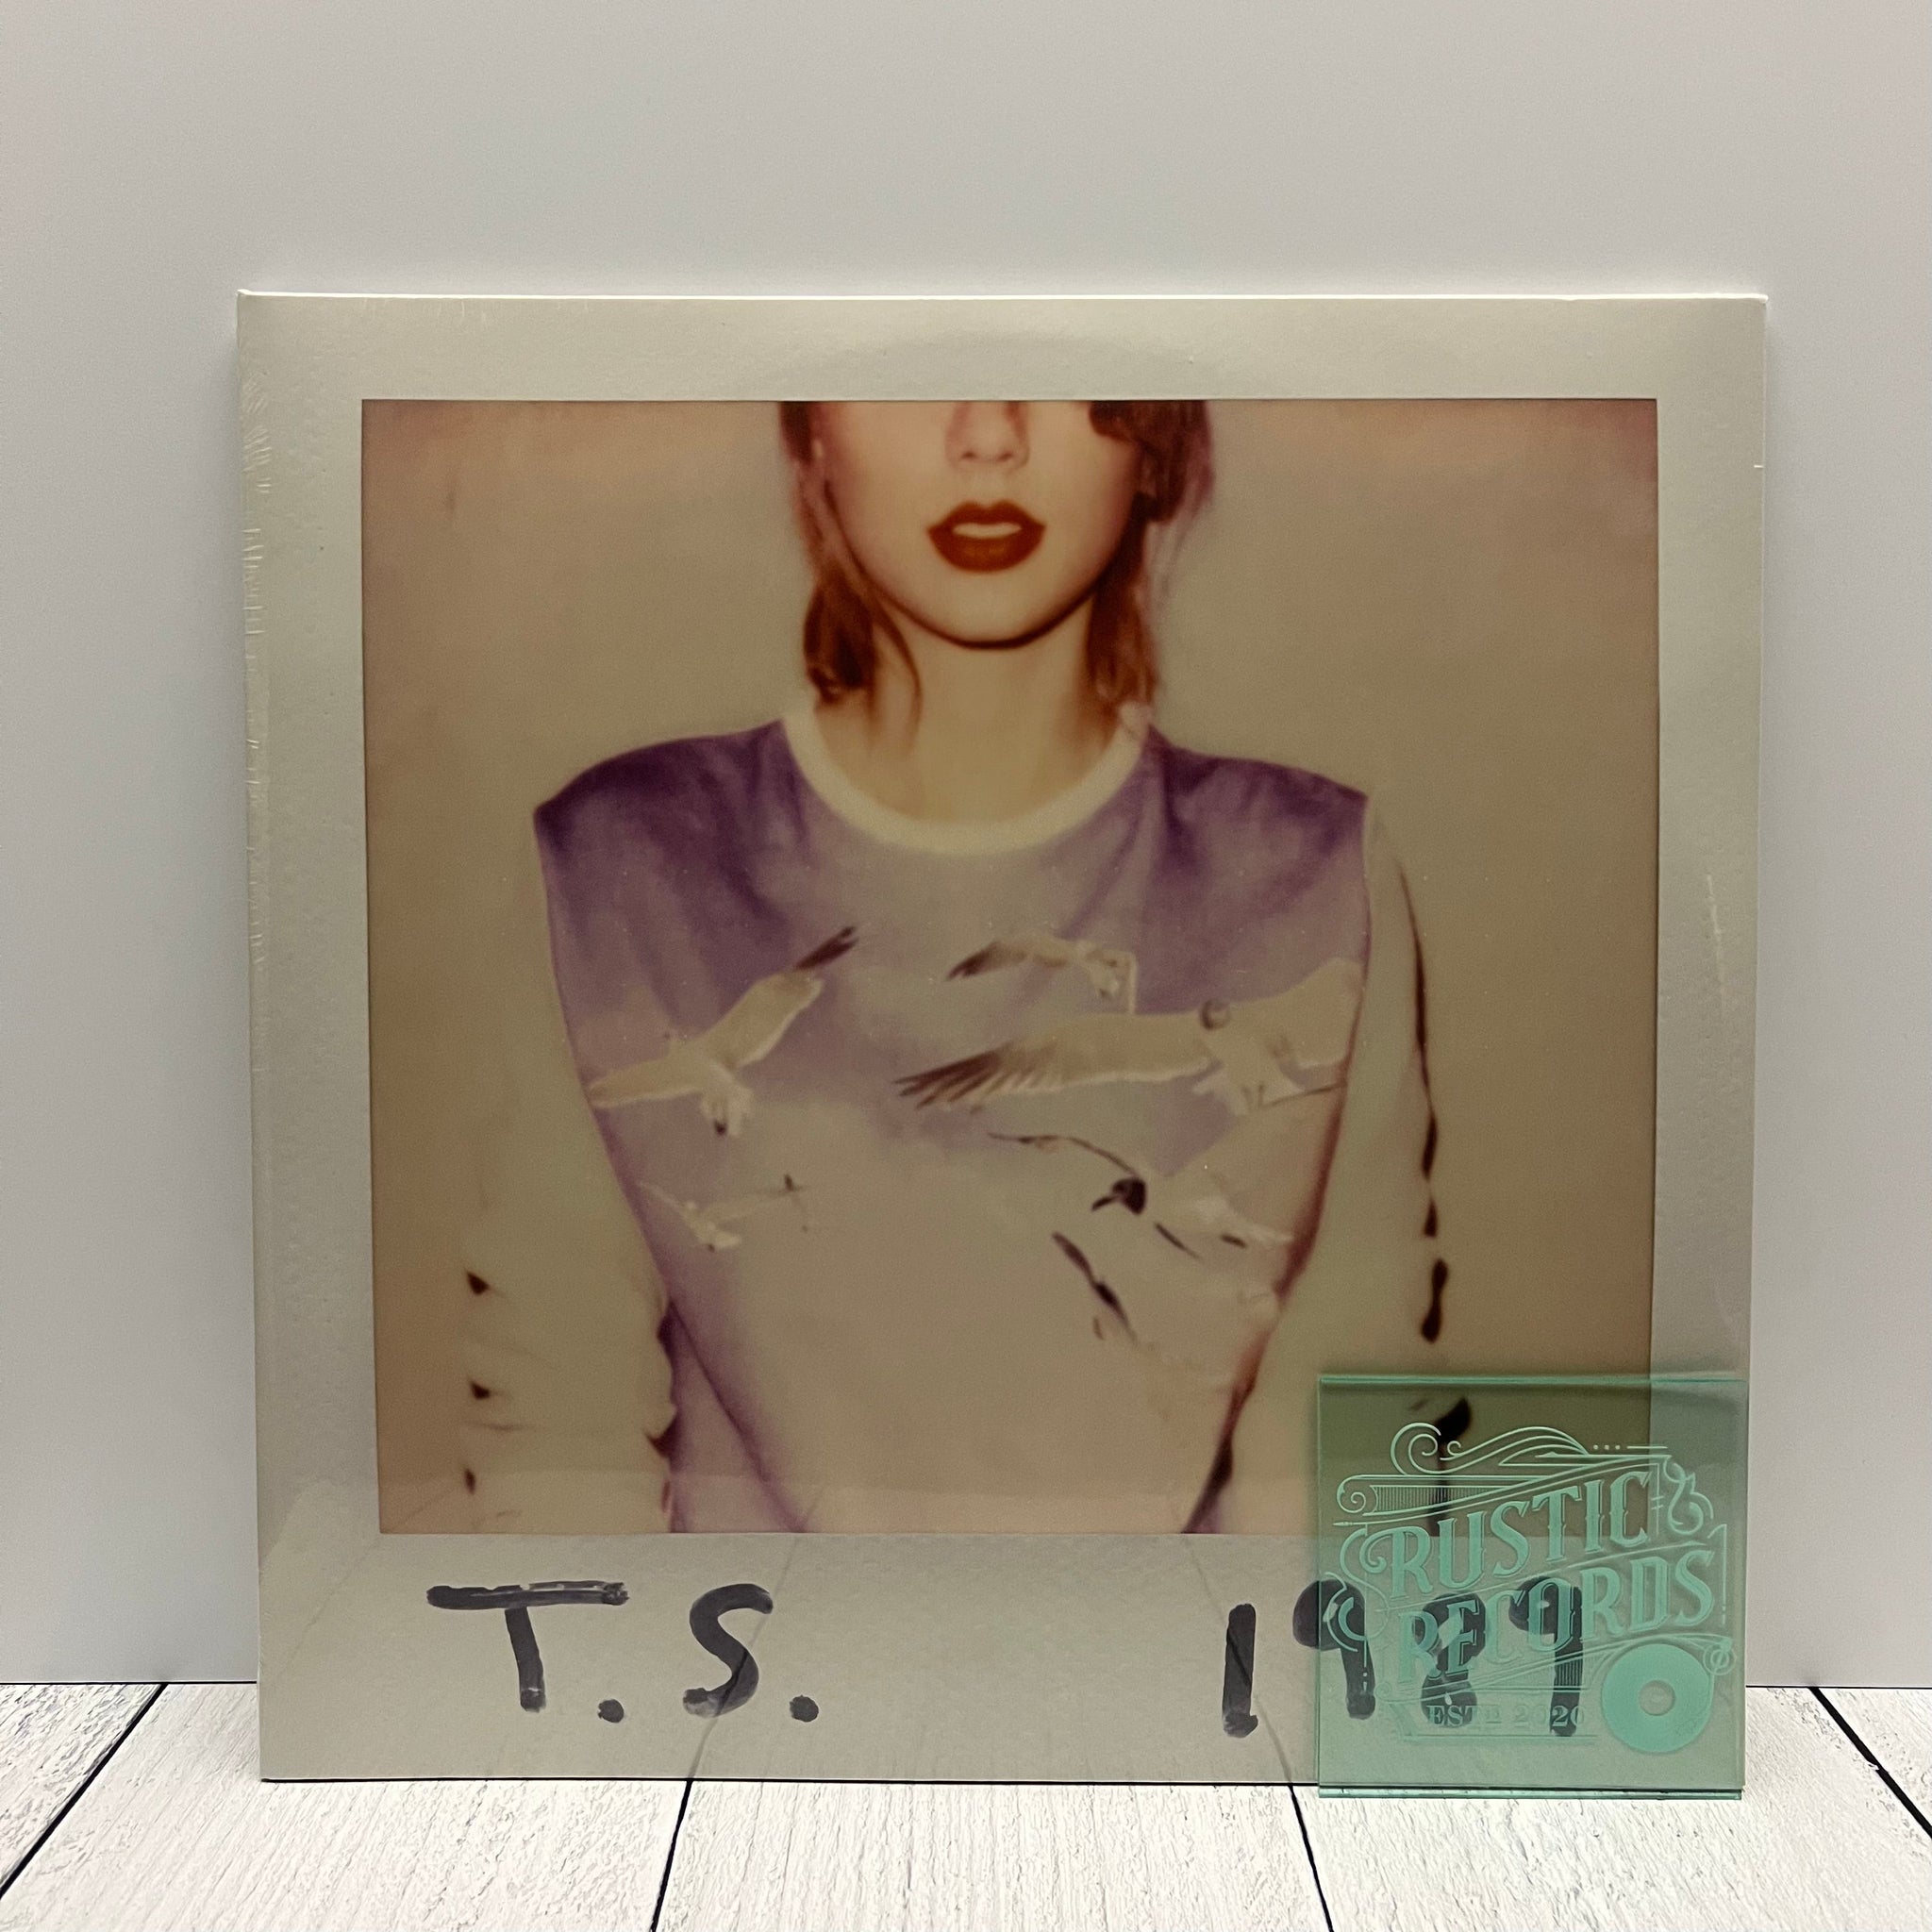 Taylor Swift - 1989 (U.S. Pressing) (LIMIT 1 PER CUSTOMER) [Bump/Crease]